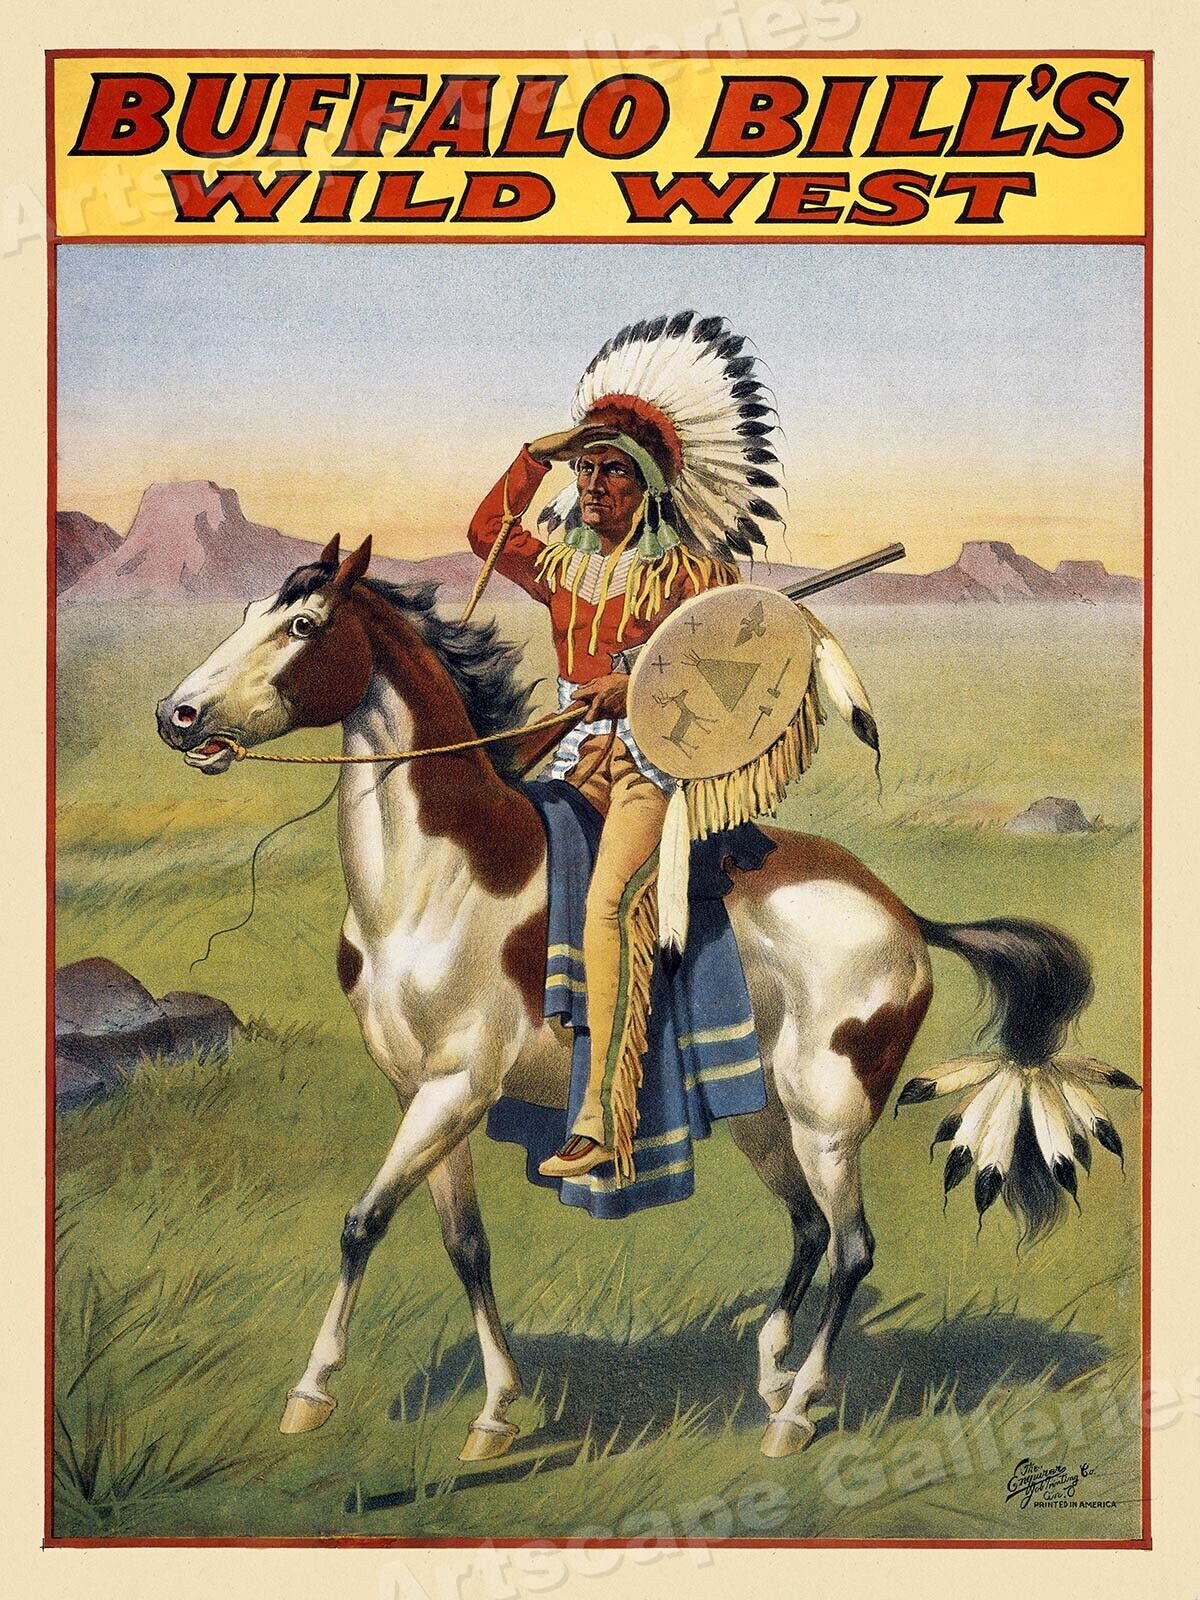 Buffalo Bill's Wild West Show - Indian on Horseback Poster 1912 - 24x32